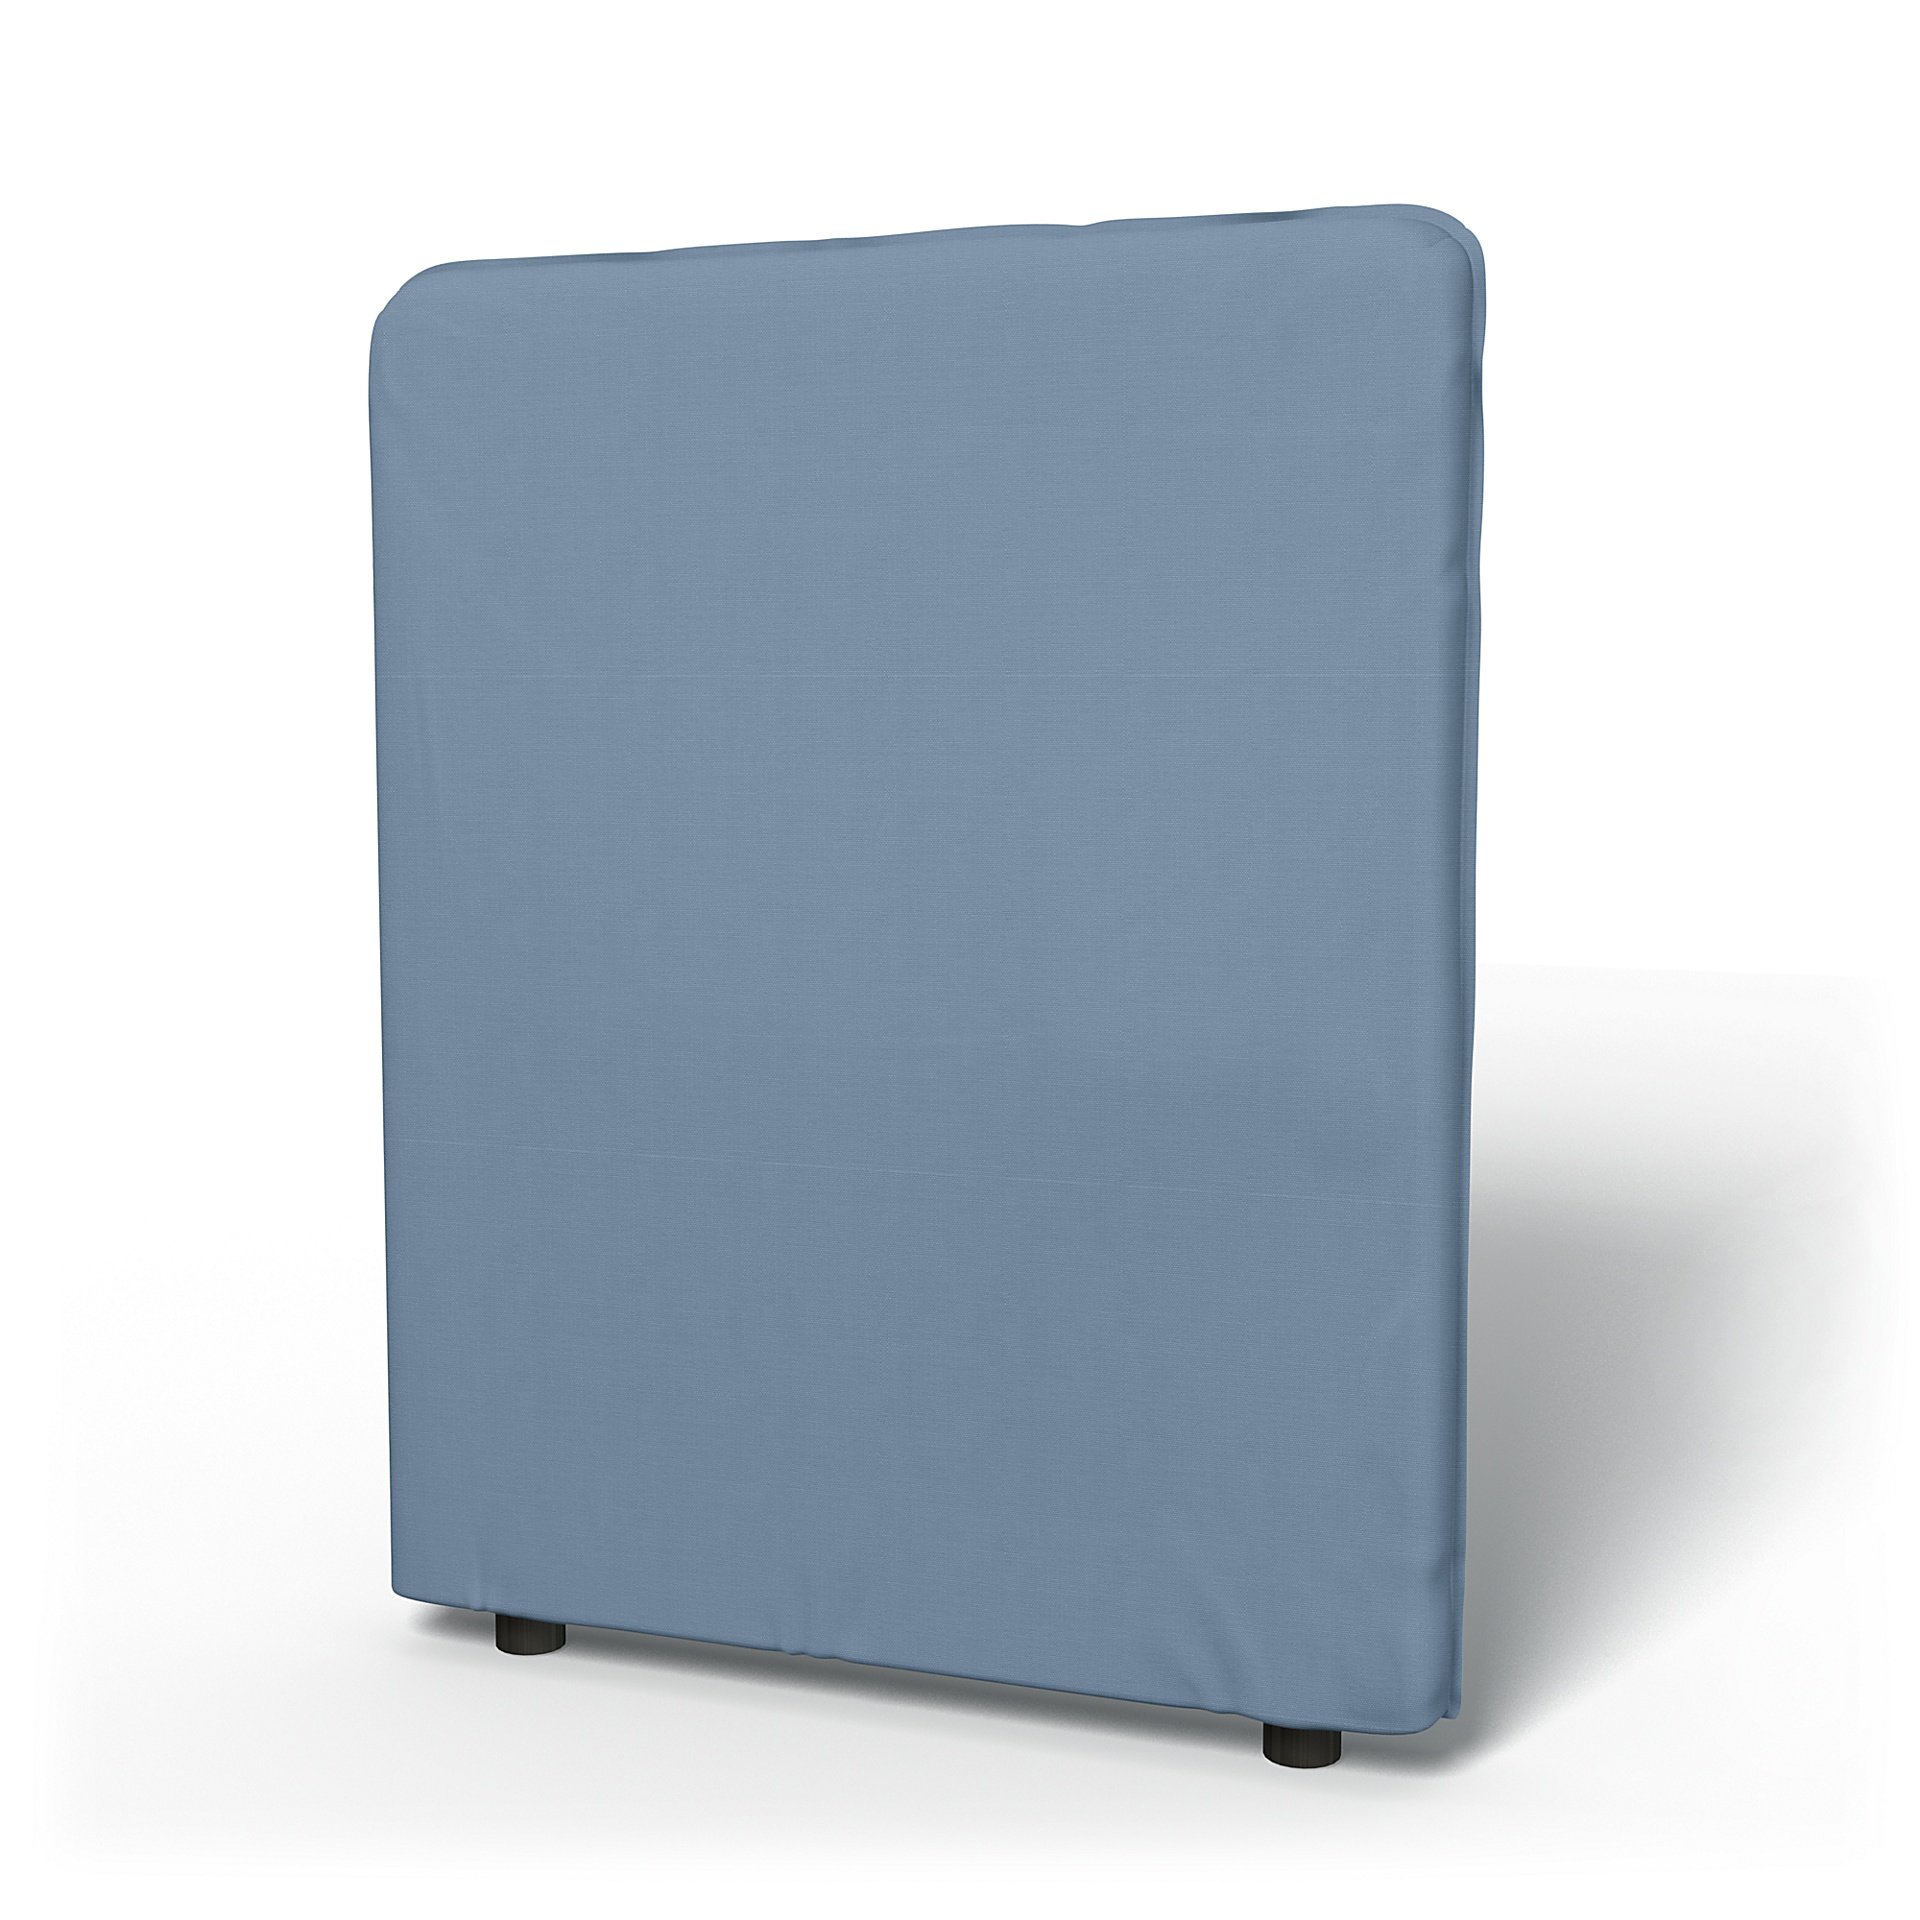 IKEA - Vallentuna High Backrest Cover 80x100cm 32x39in, Dusty Blue, Cotton - Bemz